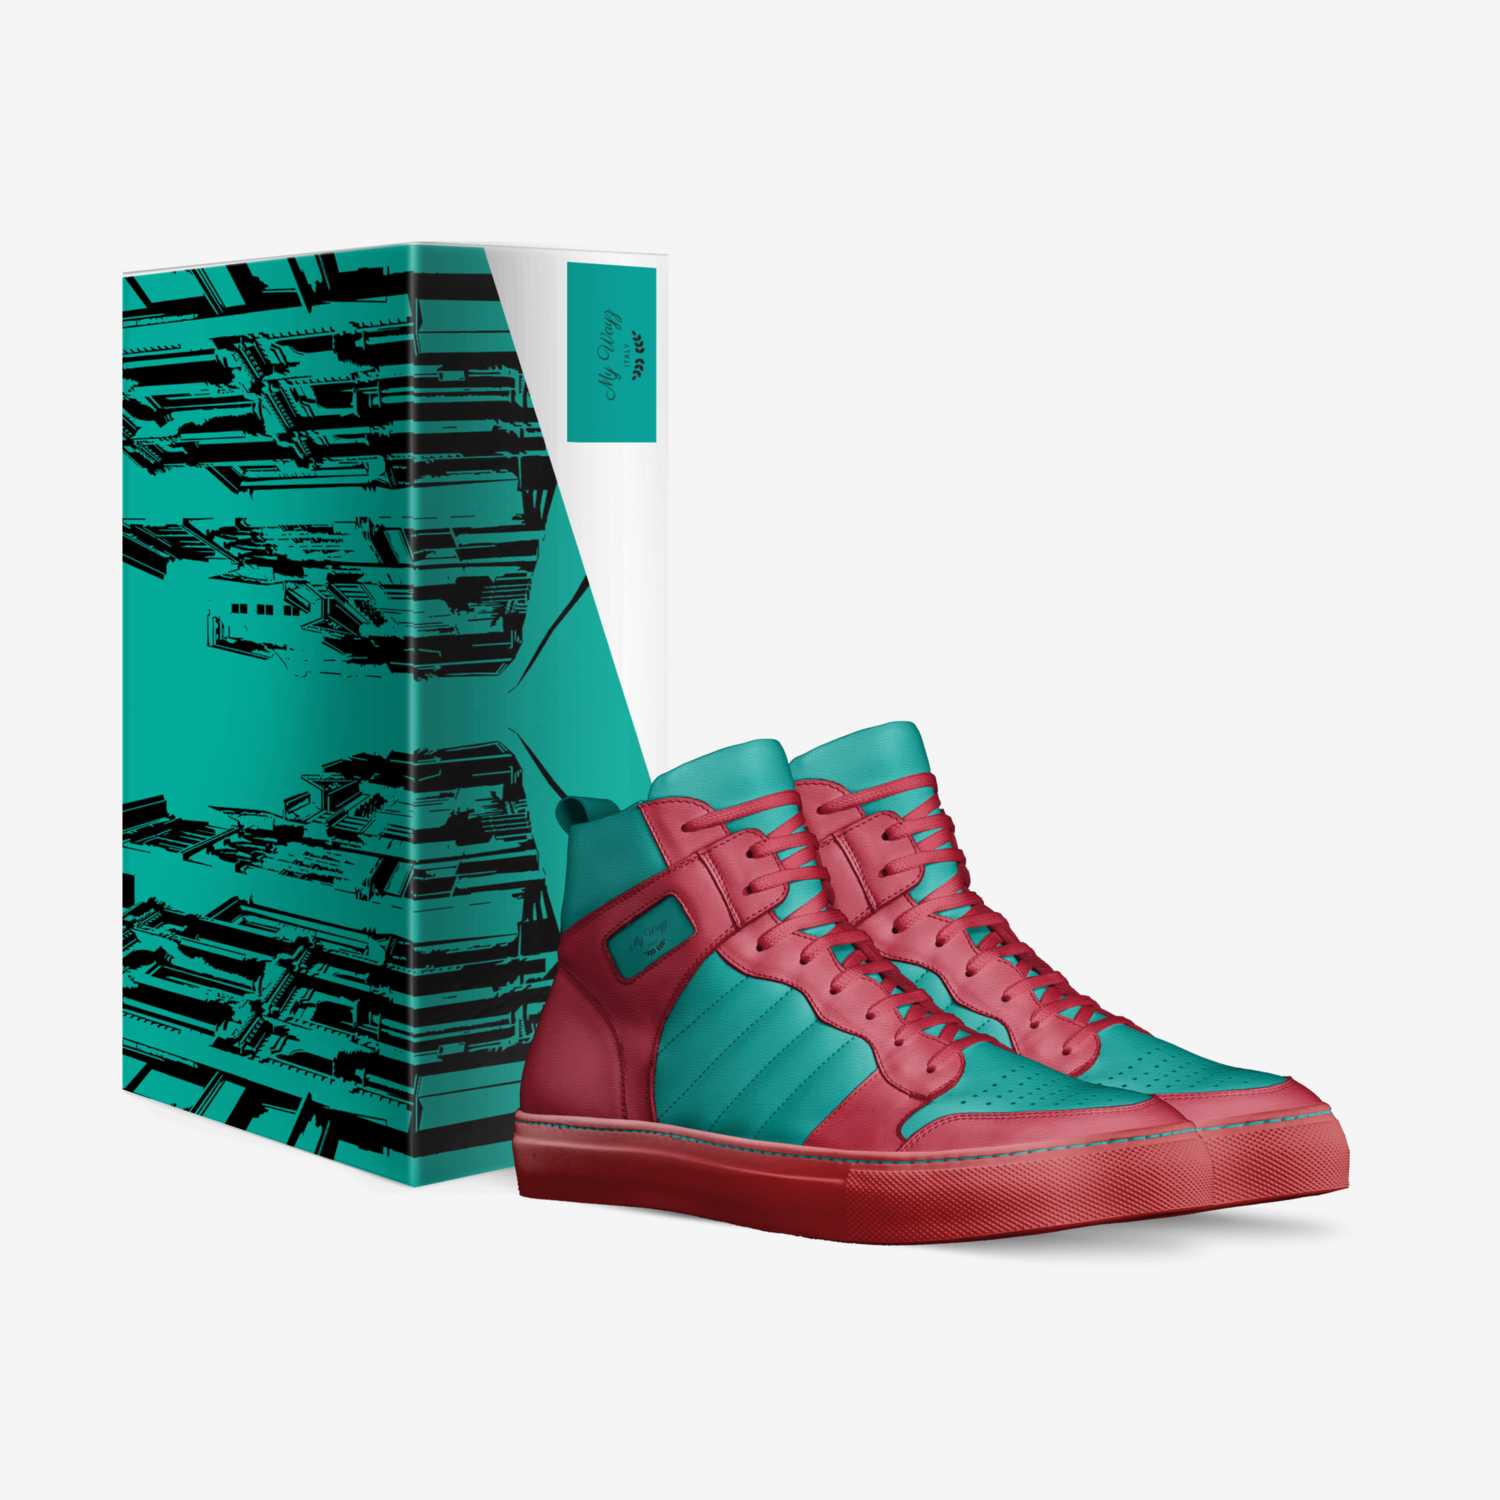 My Wayz custom made in Italy shoes by Natasha Robinson | Box view